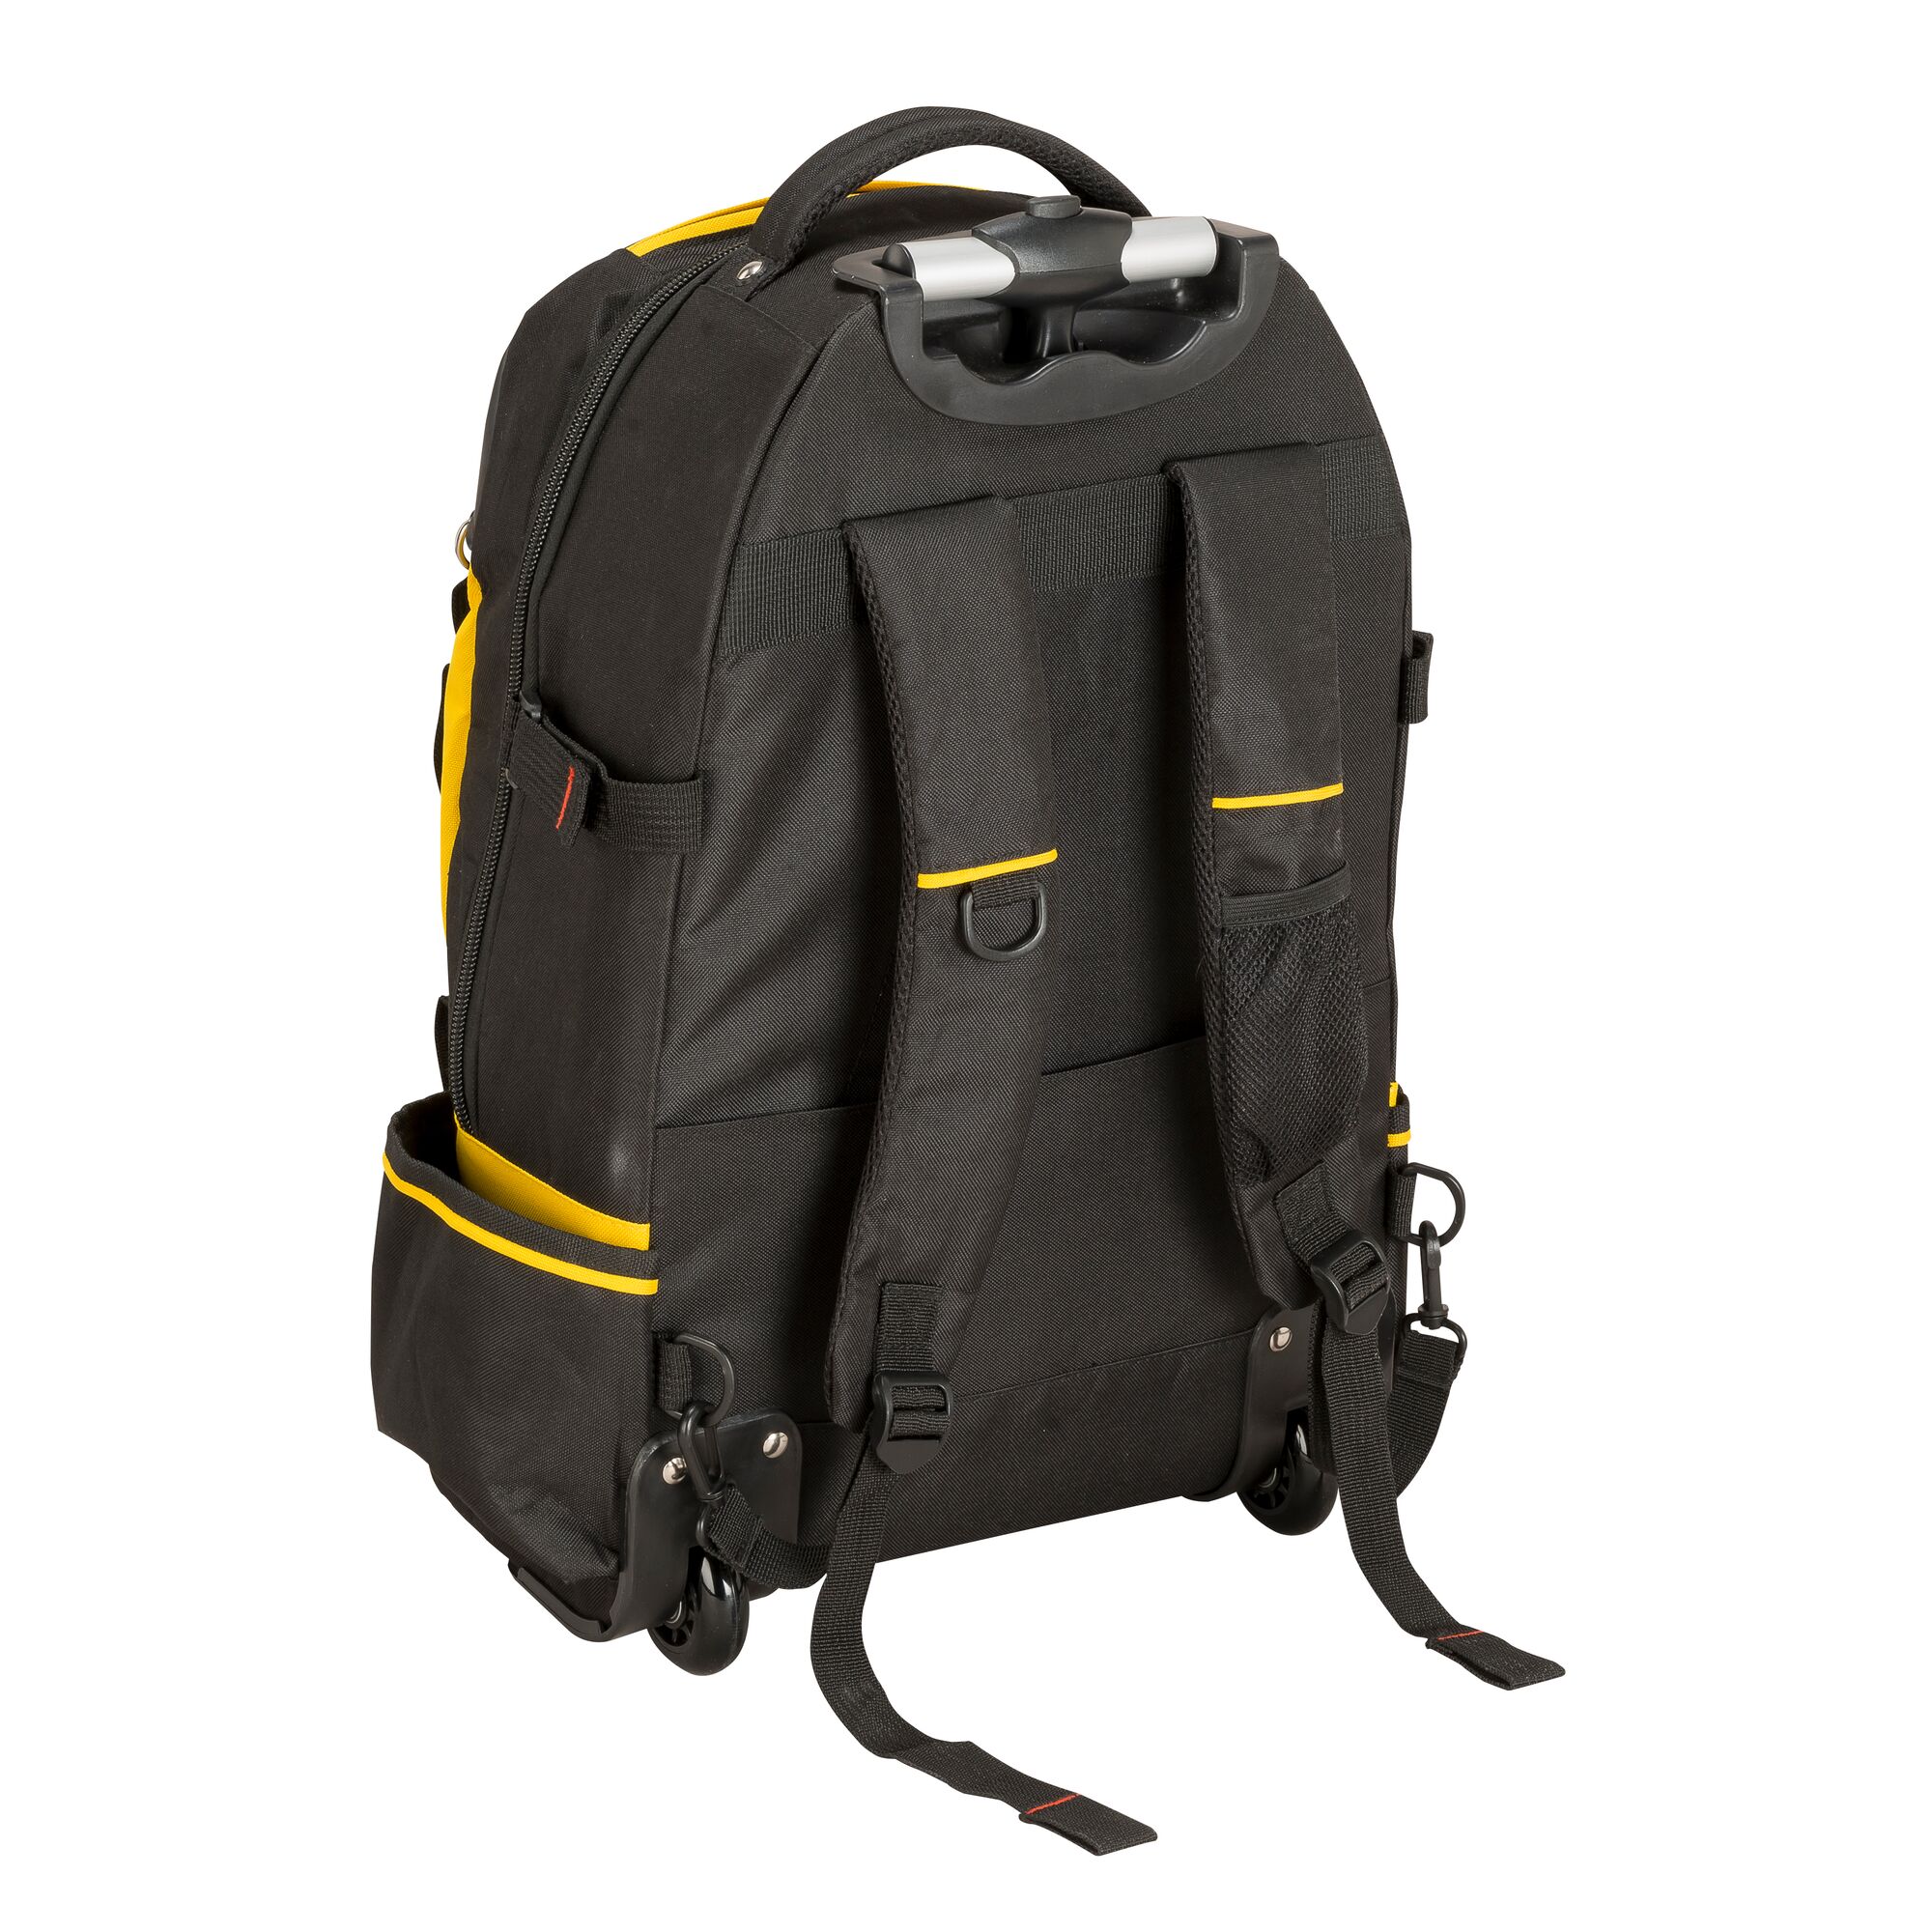 Irwin Pro Tool Backpack - Bunnings Australia